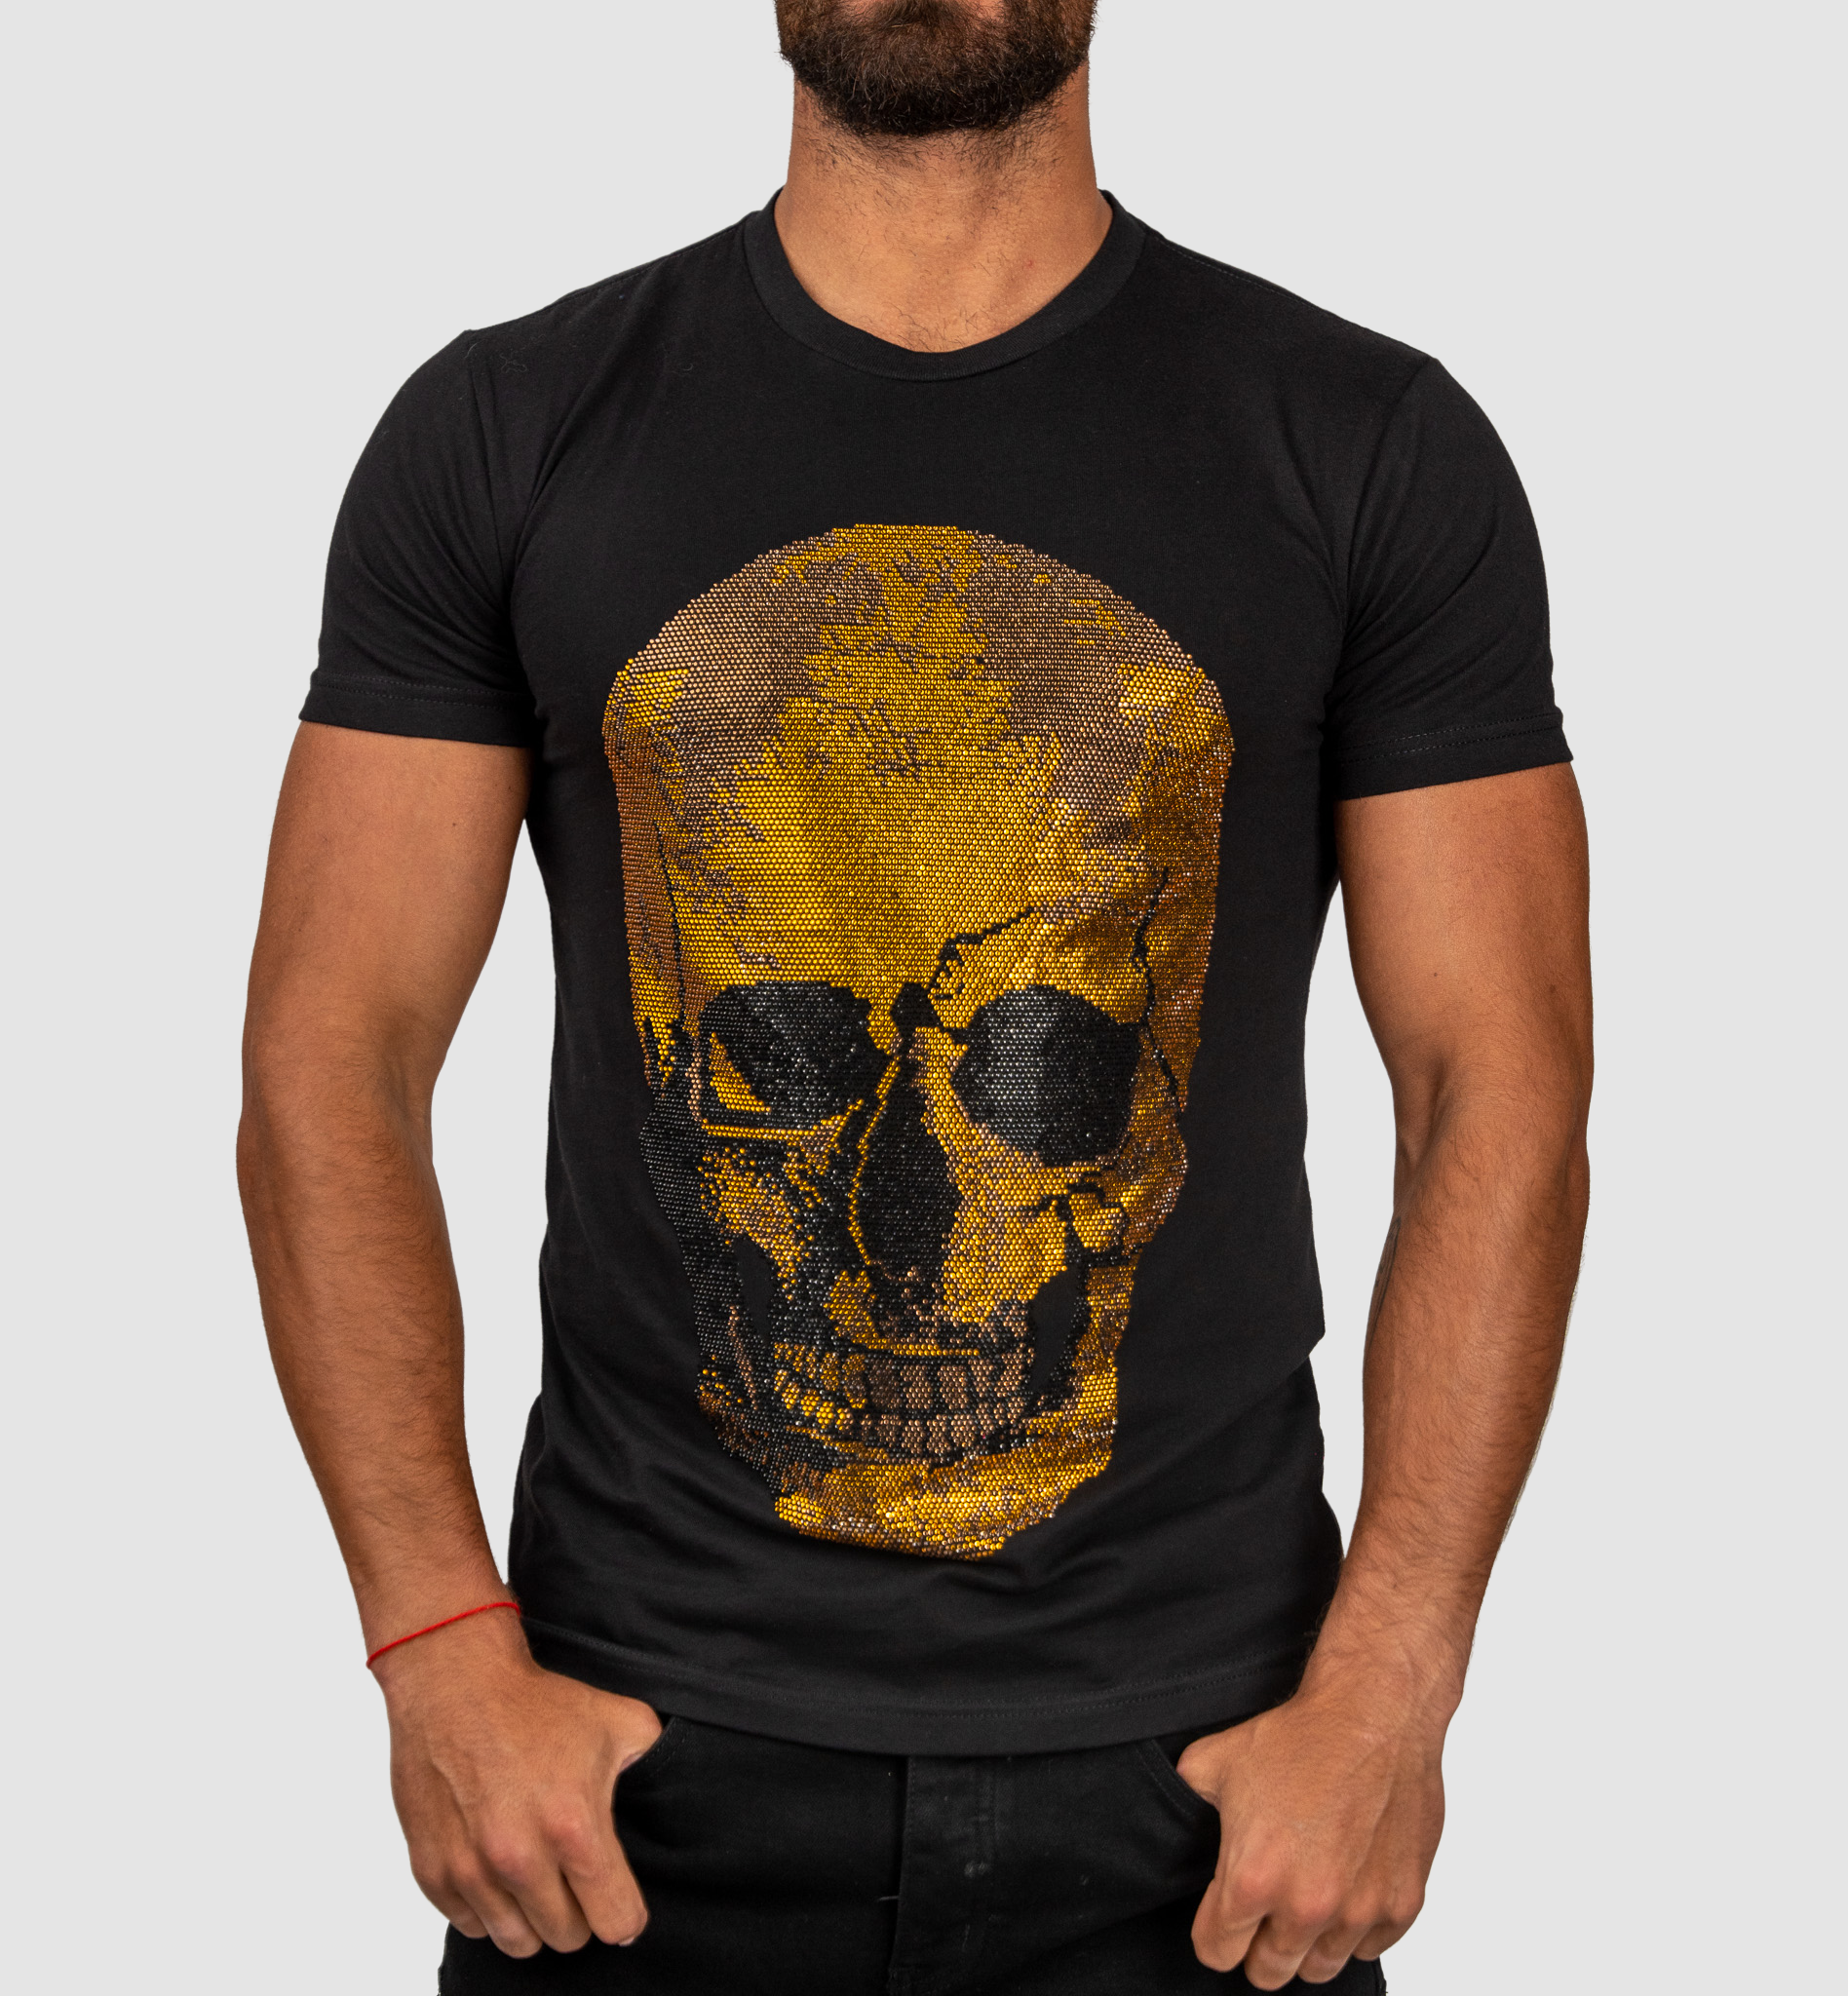 ADDICTED Black W Gold Skull Man